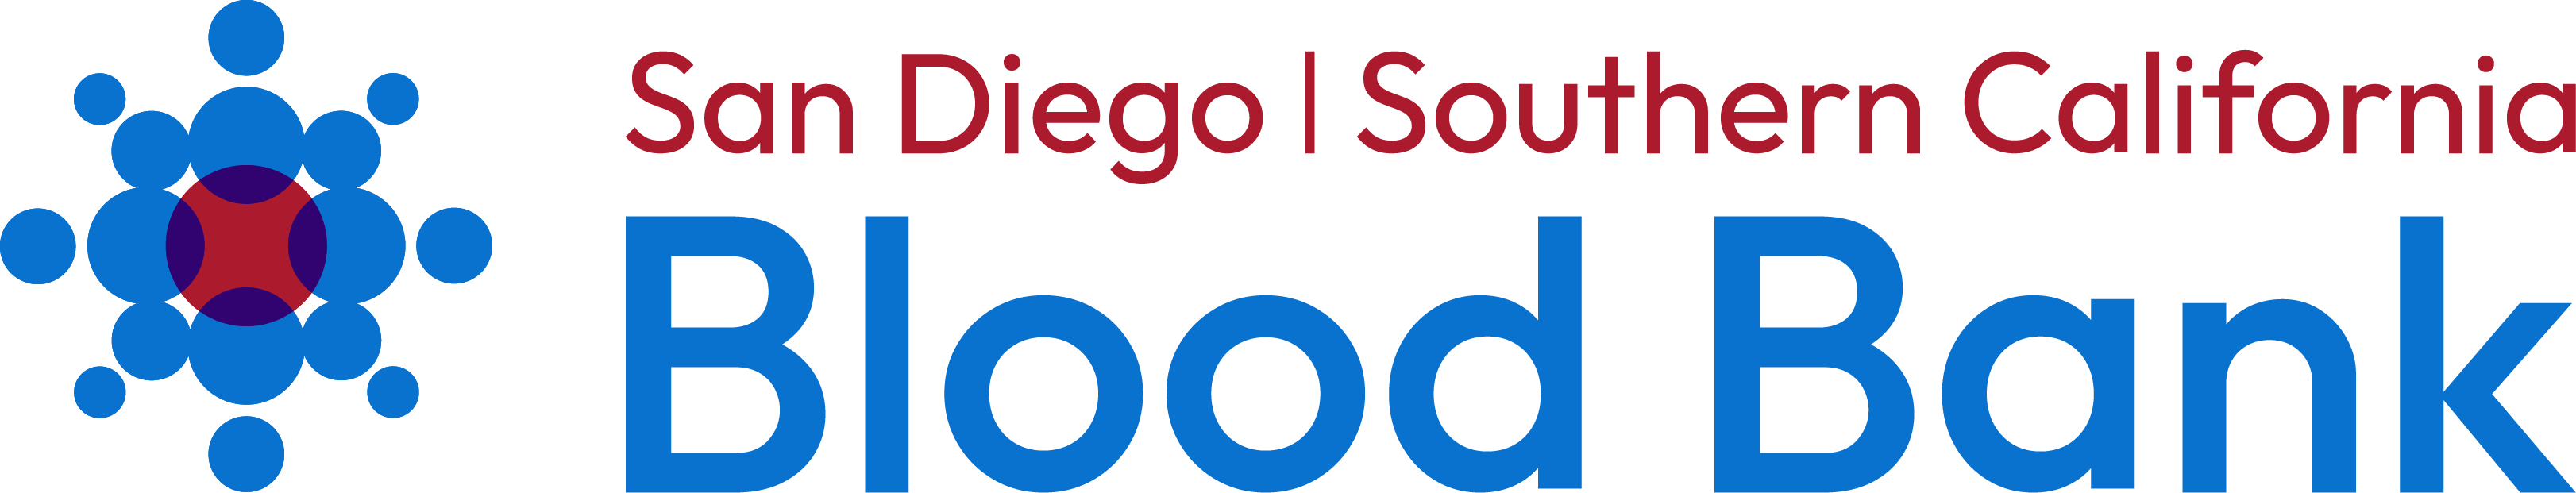 San Diego Blood Bank